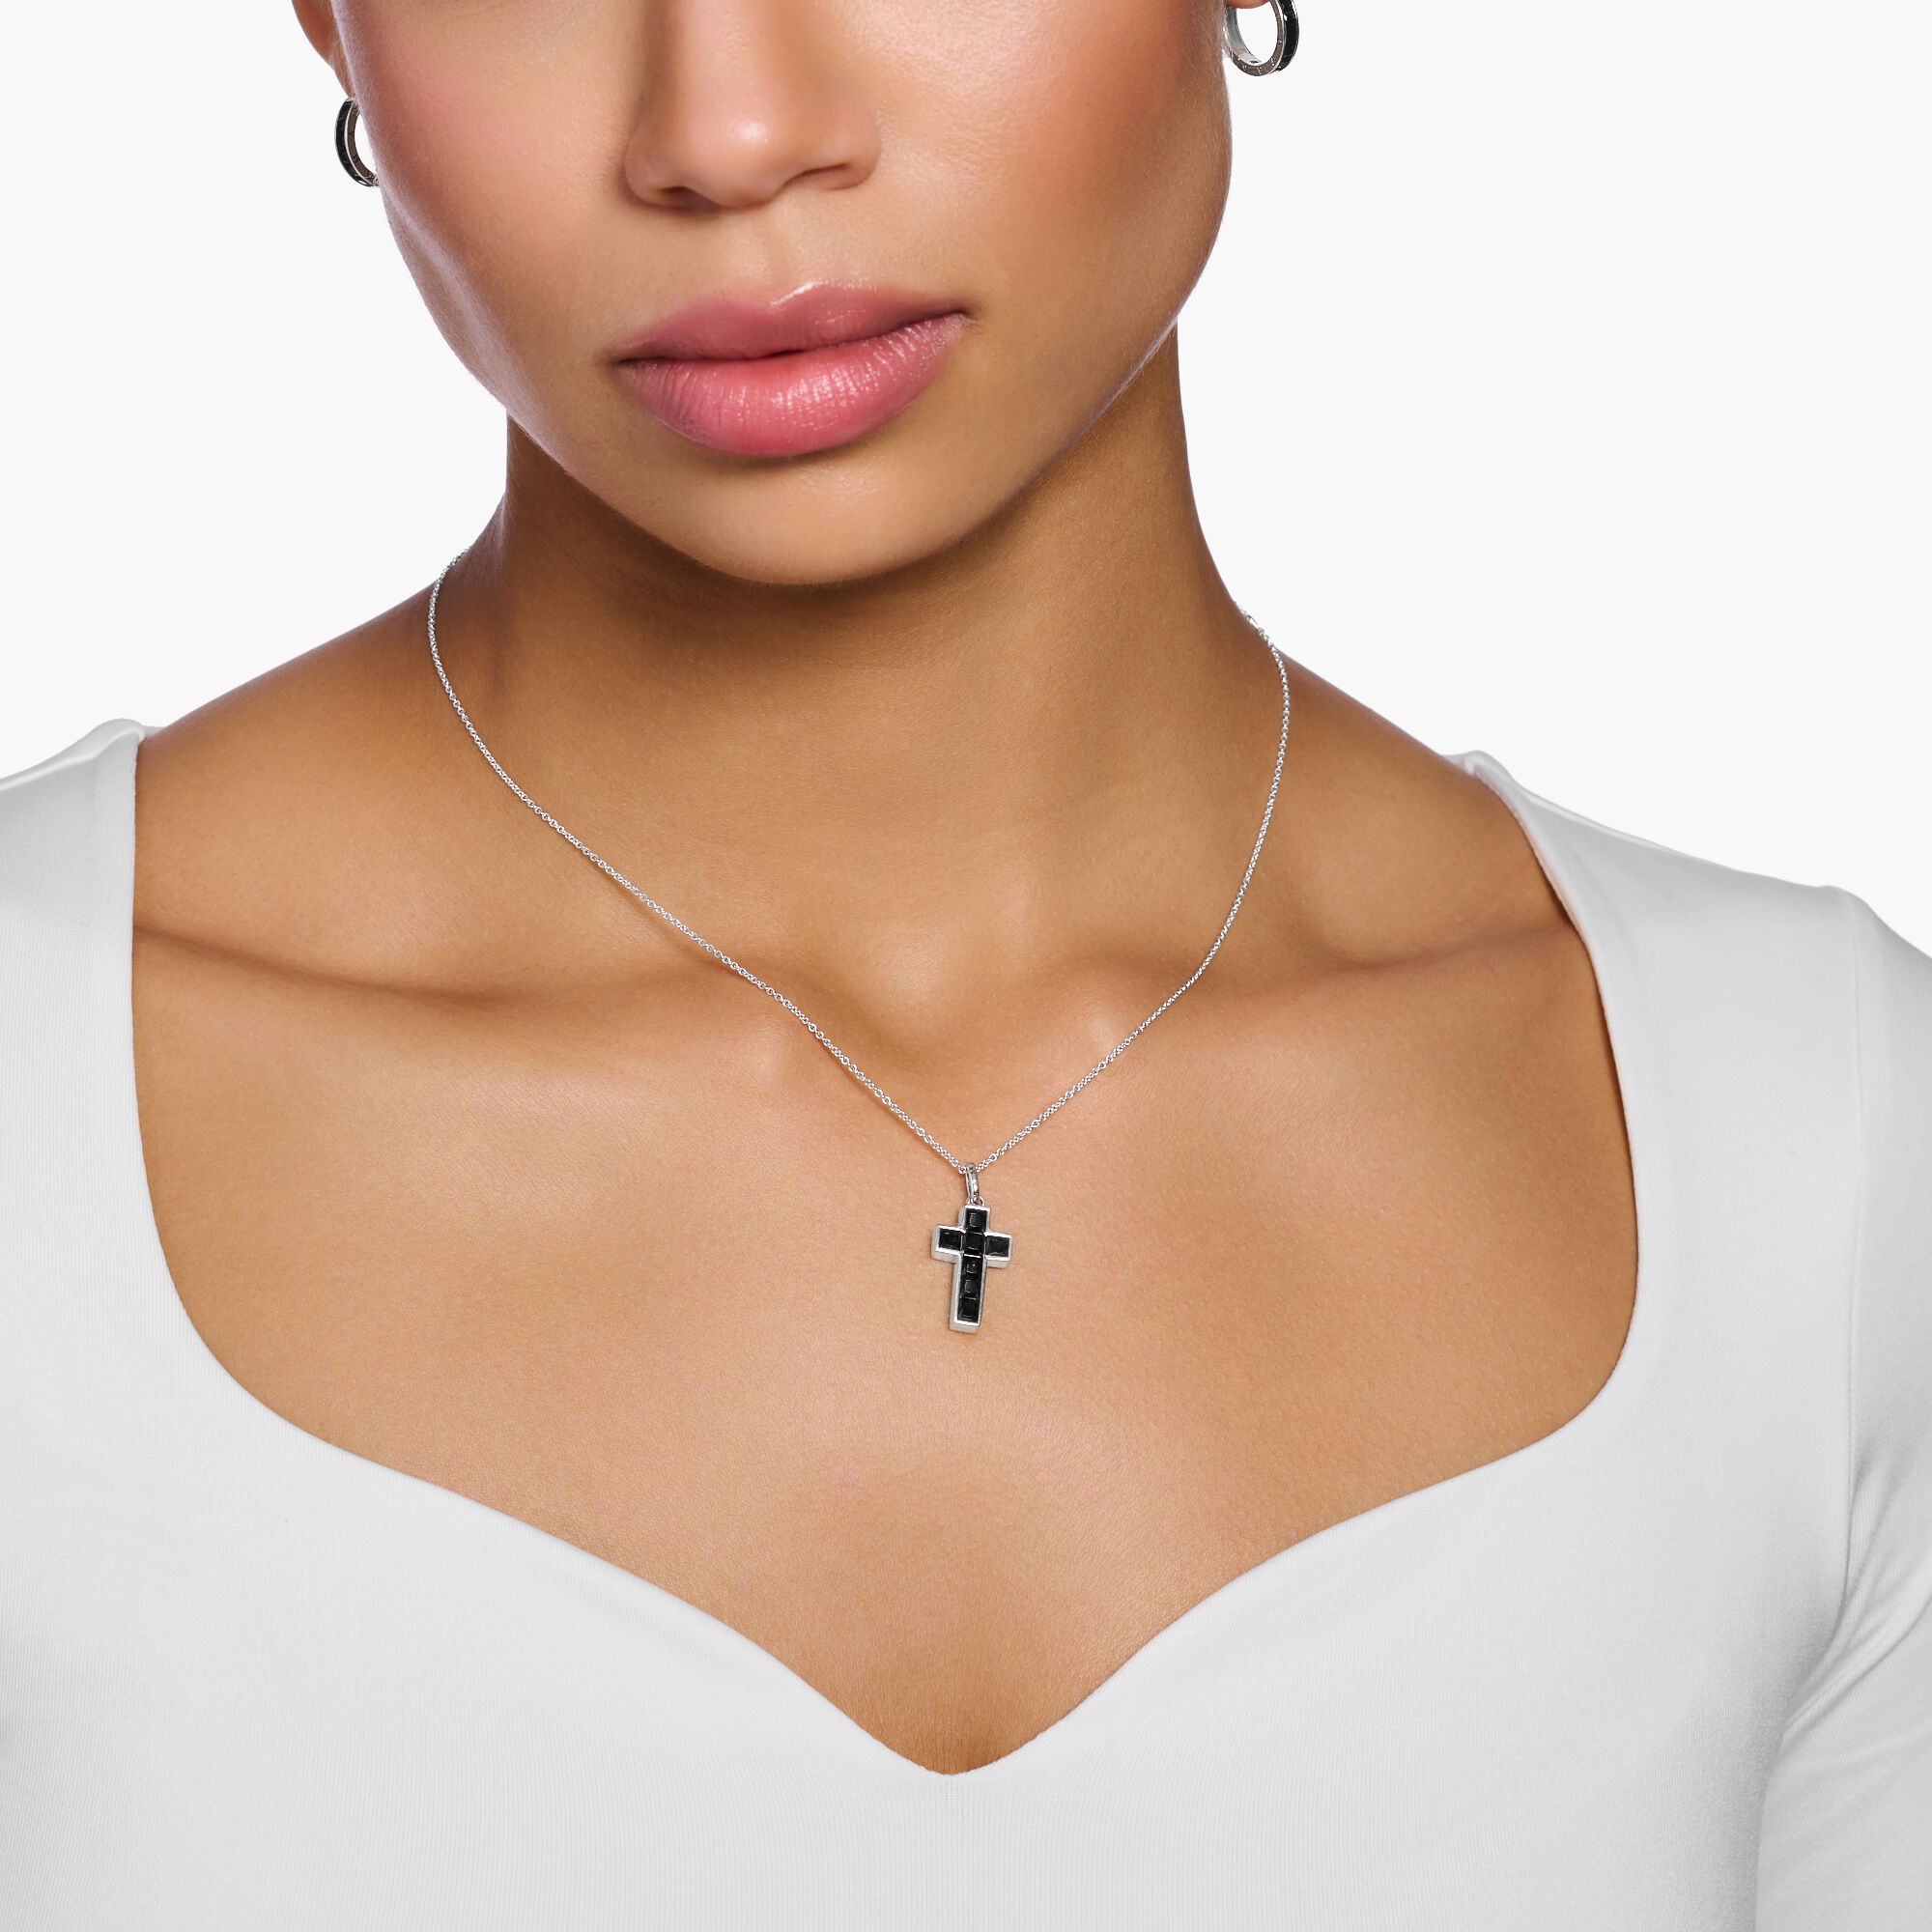 stones | Necklace pendant, with THOMAS cross black SABO